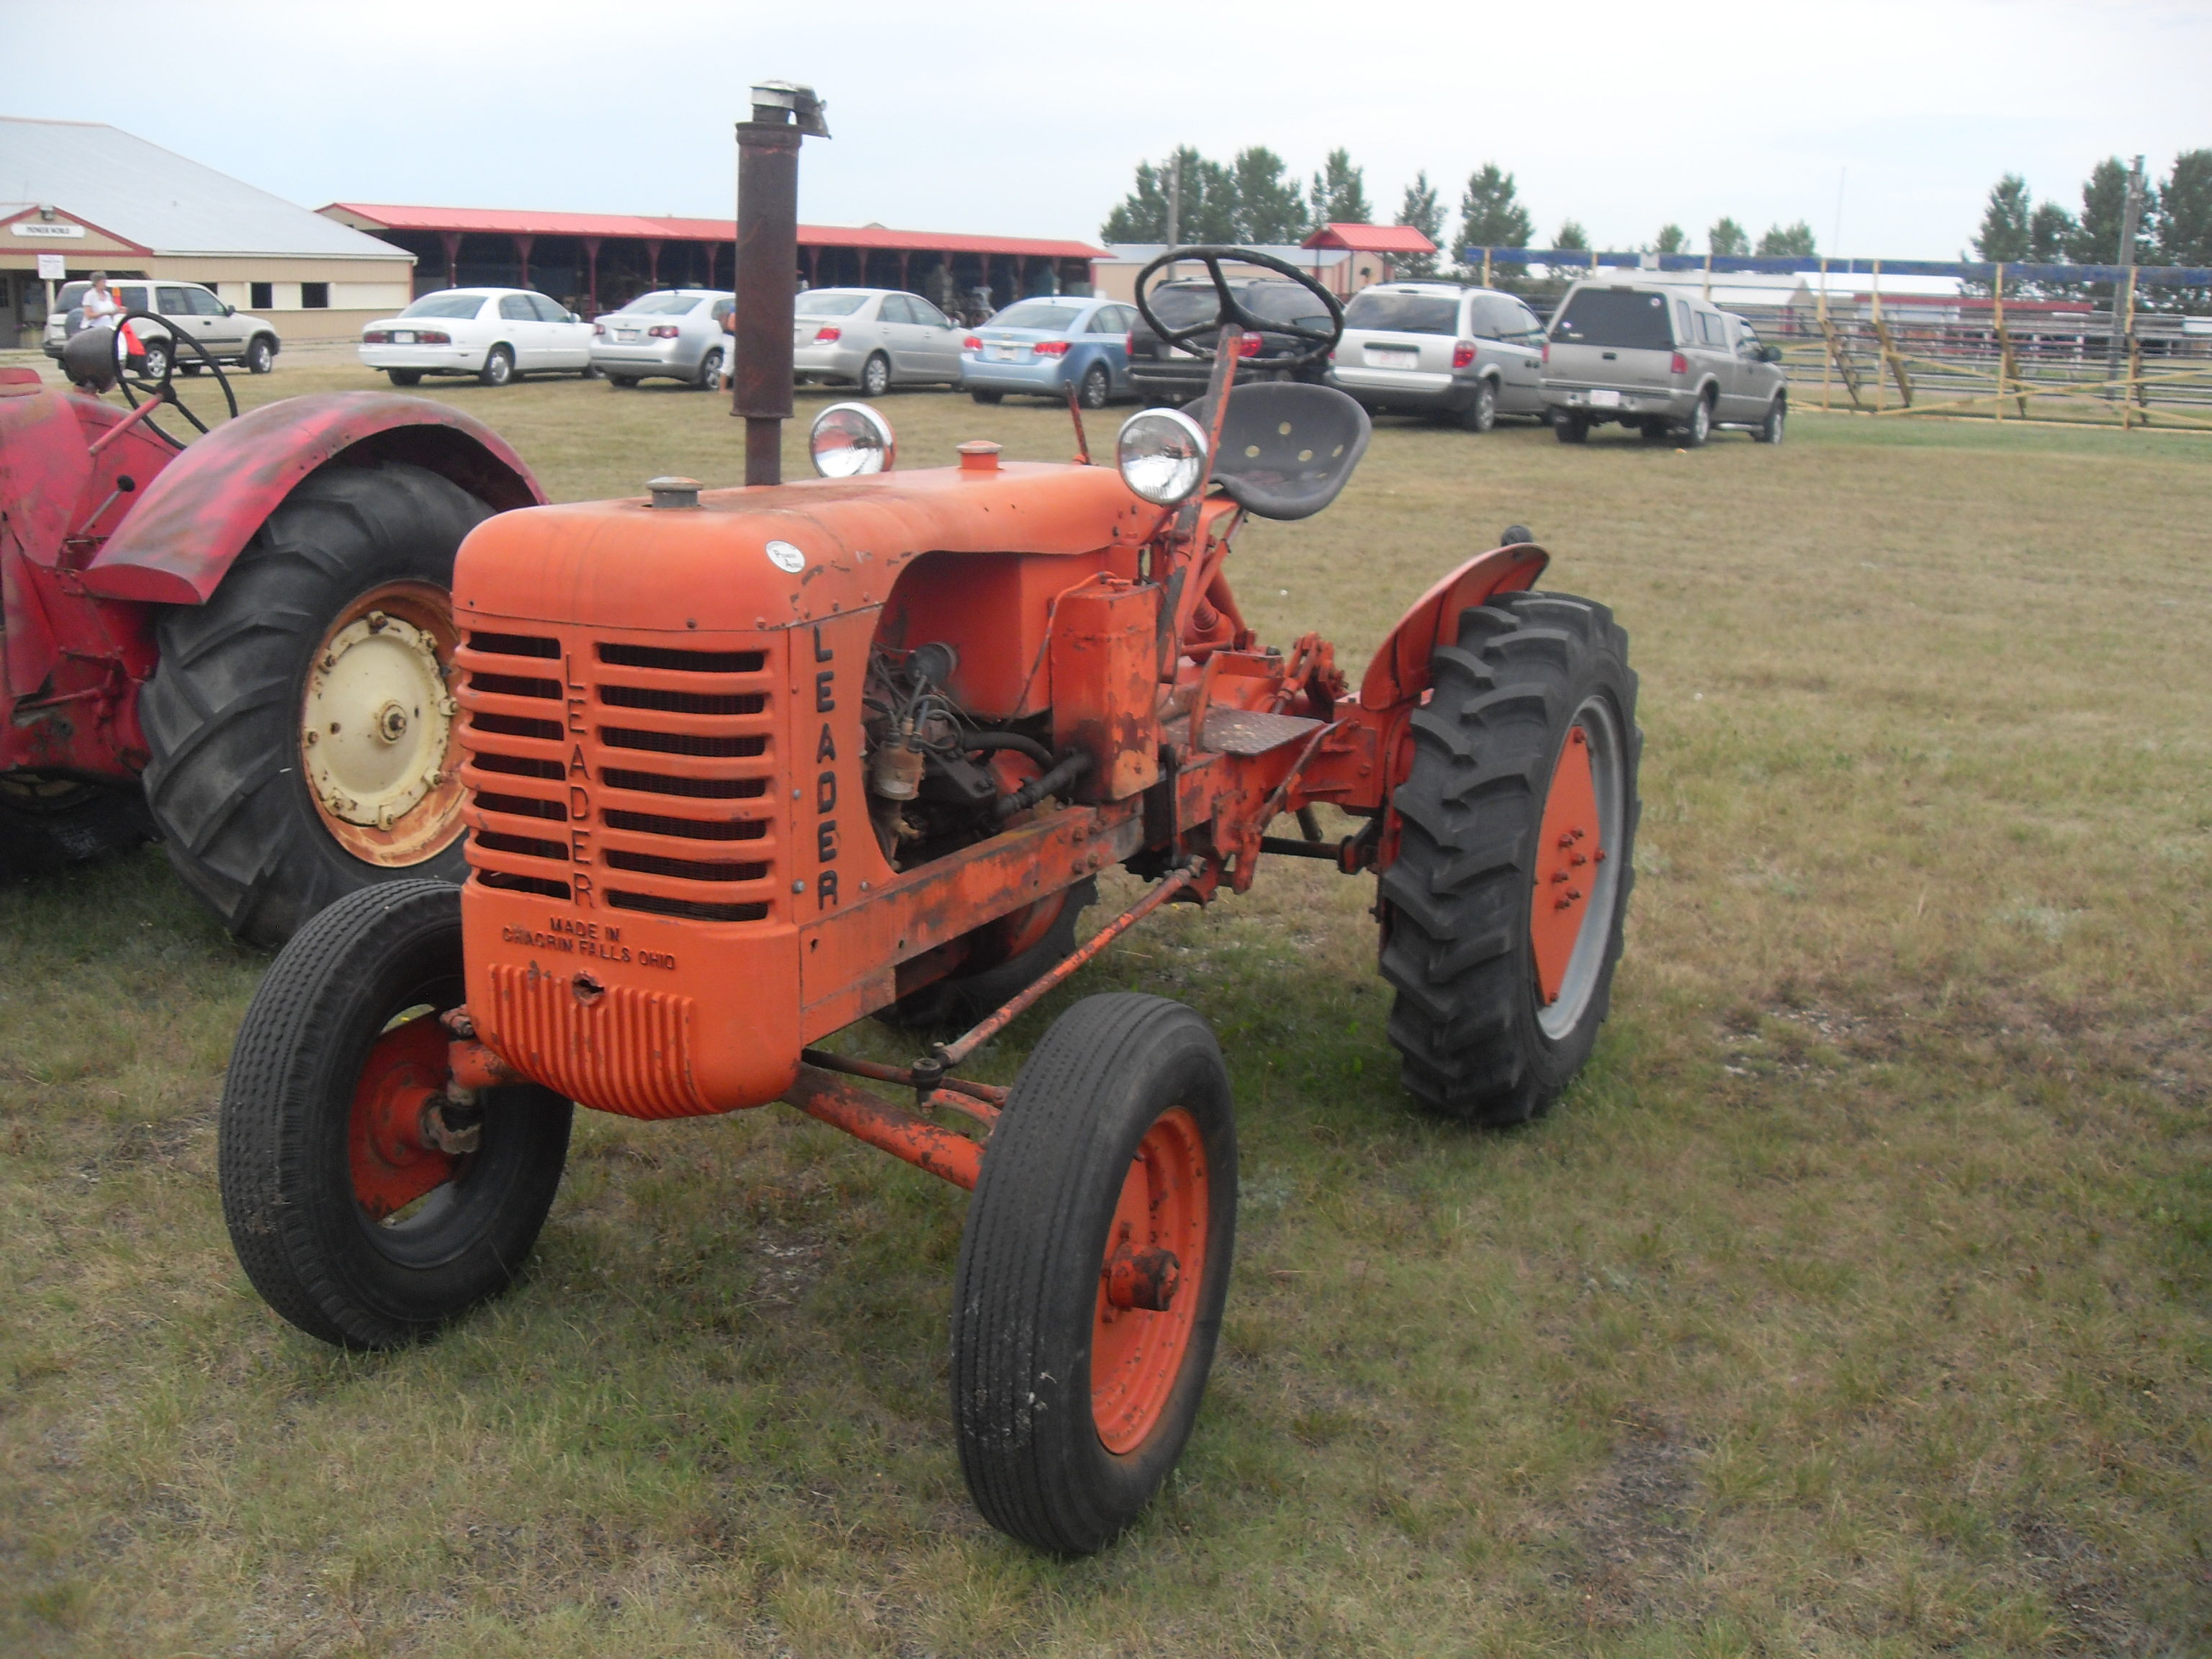 Leader tractor, “Made in Auburn Ohio”.